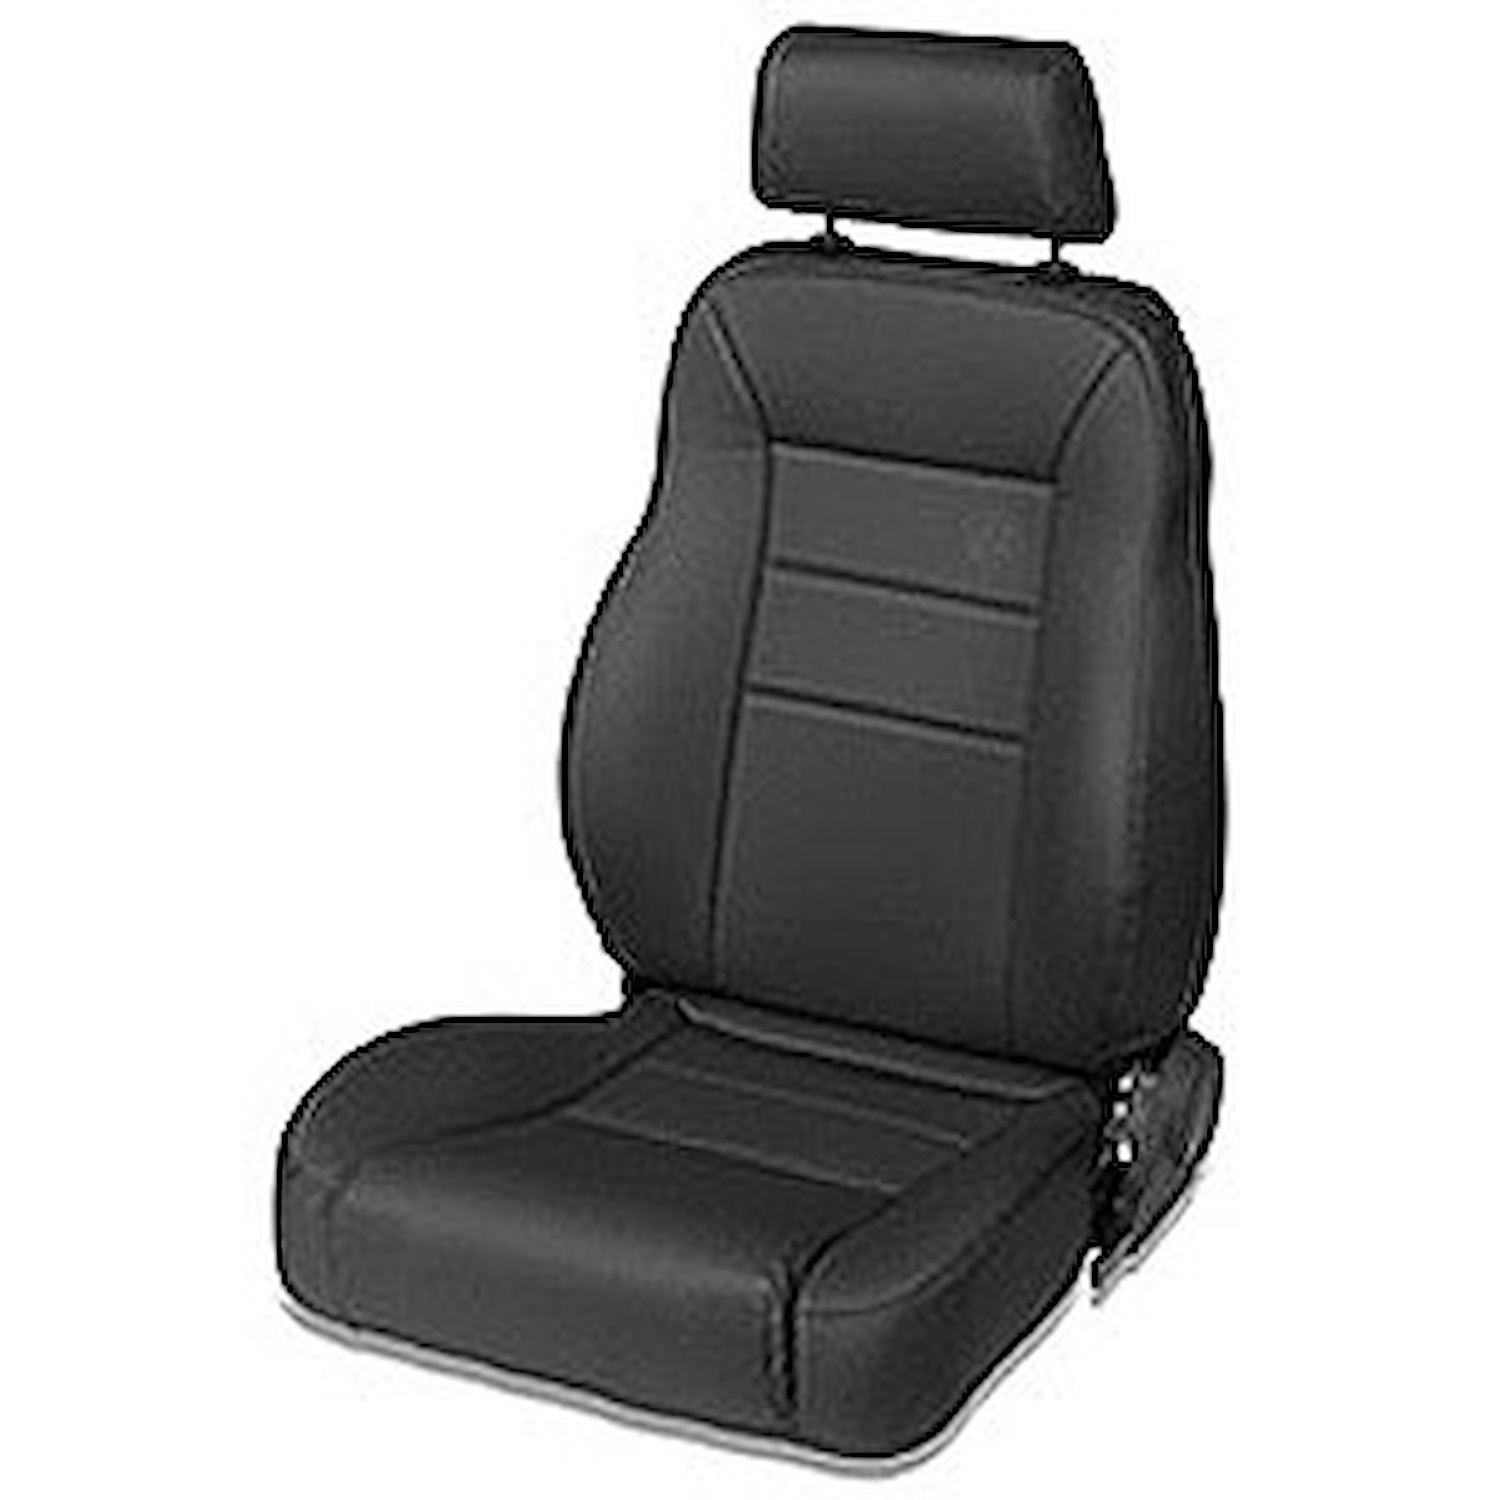 Trailmax II Pro Seat, Black Denim, Front, High-Back, Vinyl, Premium Bucket, Driver side,